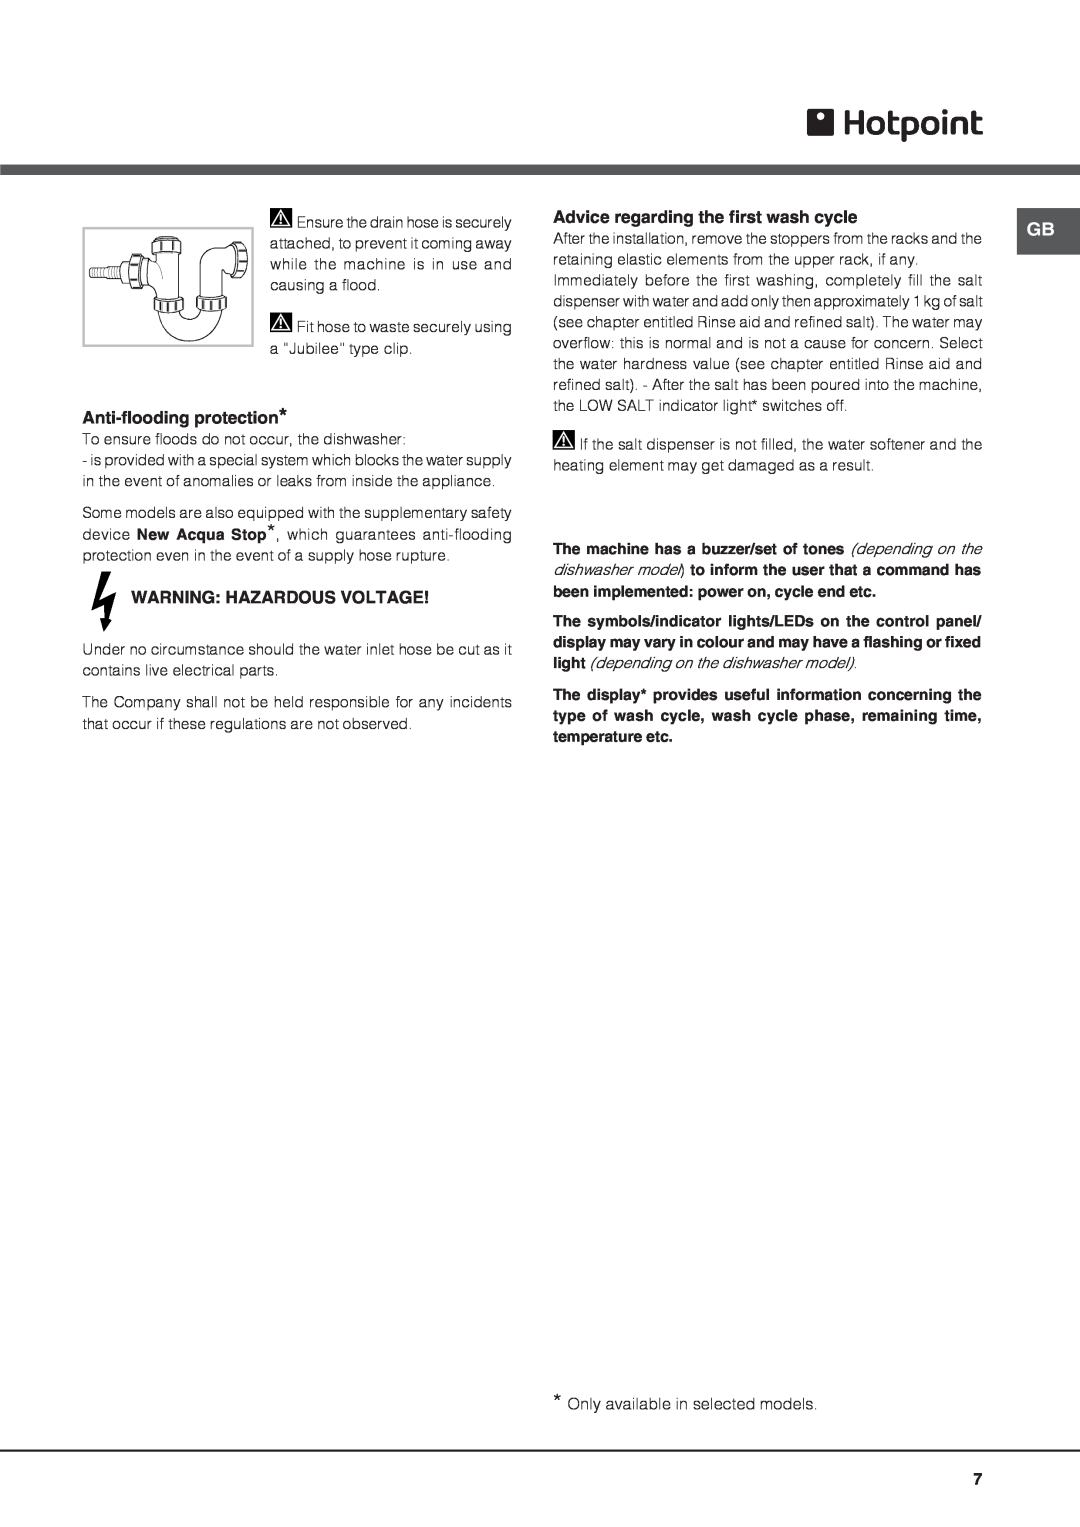 Hotpoint FDYF 11011 manual Anti-floodingprotection, Warning Hazardous Voltage, Advice regarding the first wash cycle 